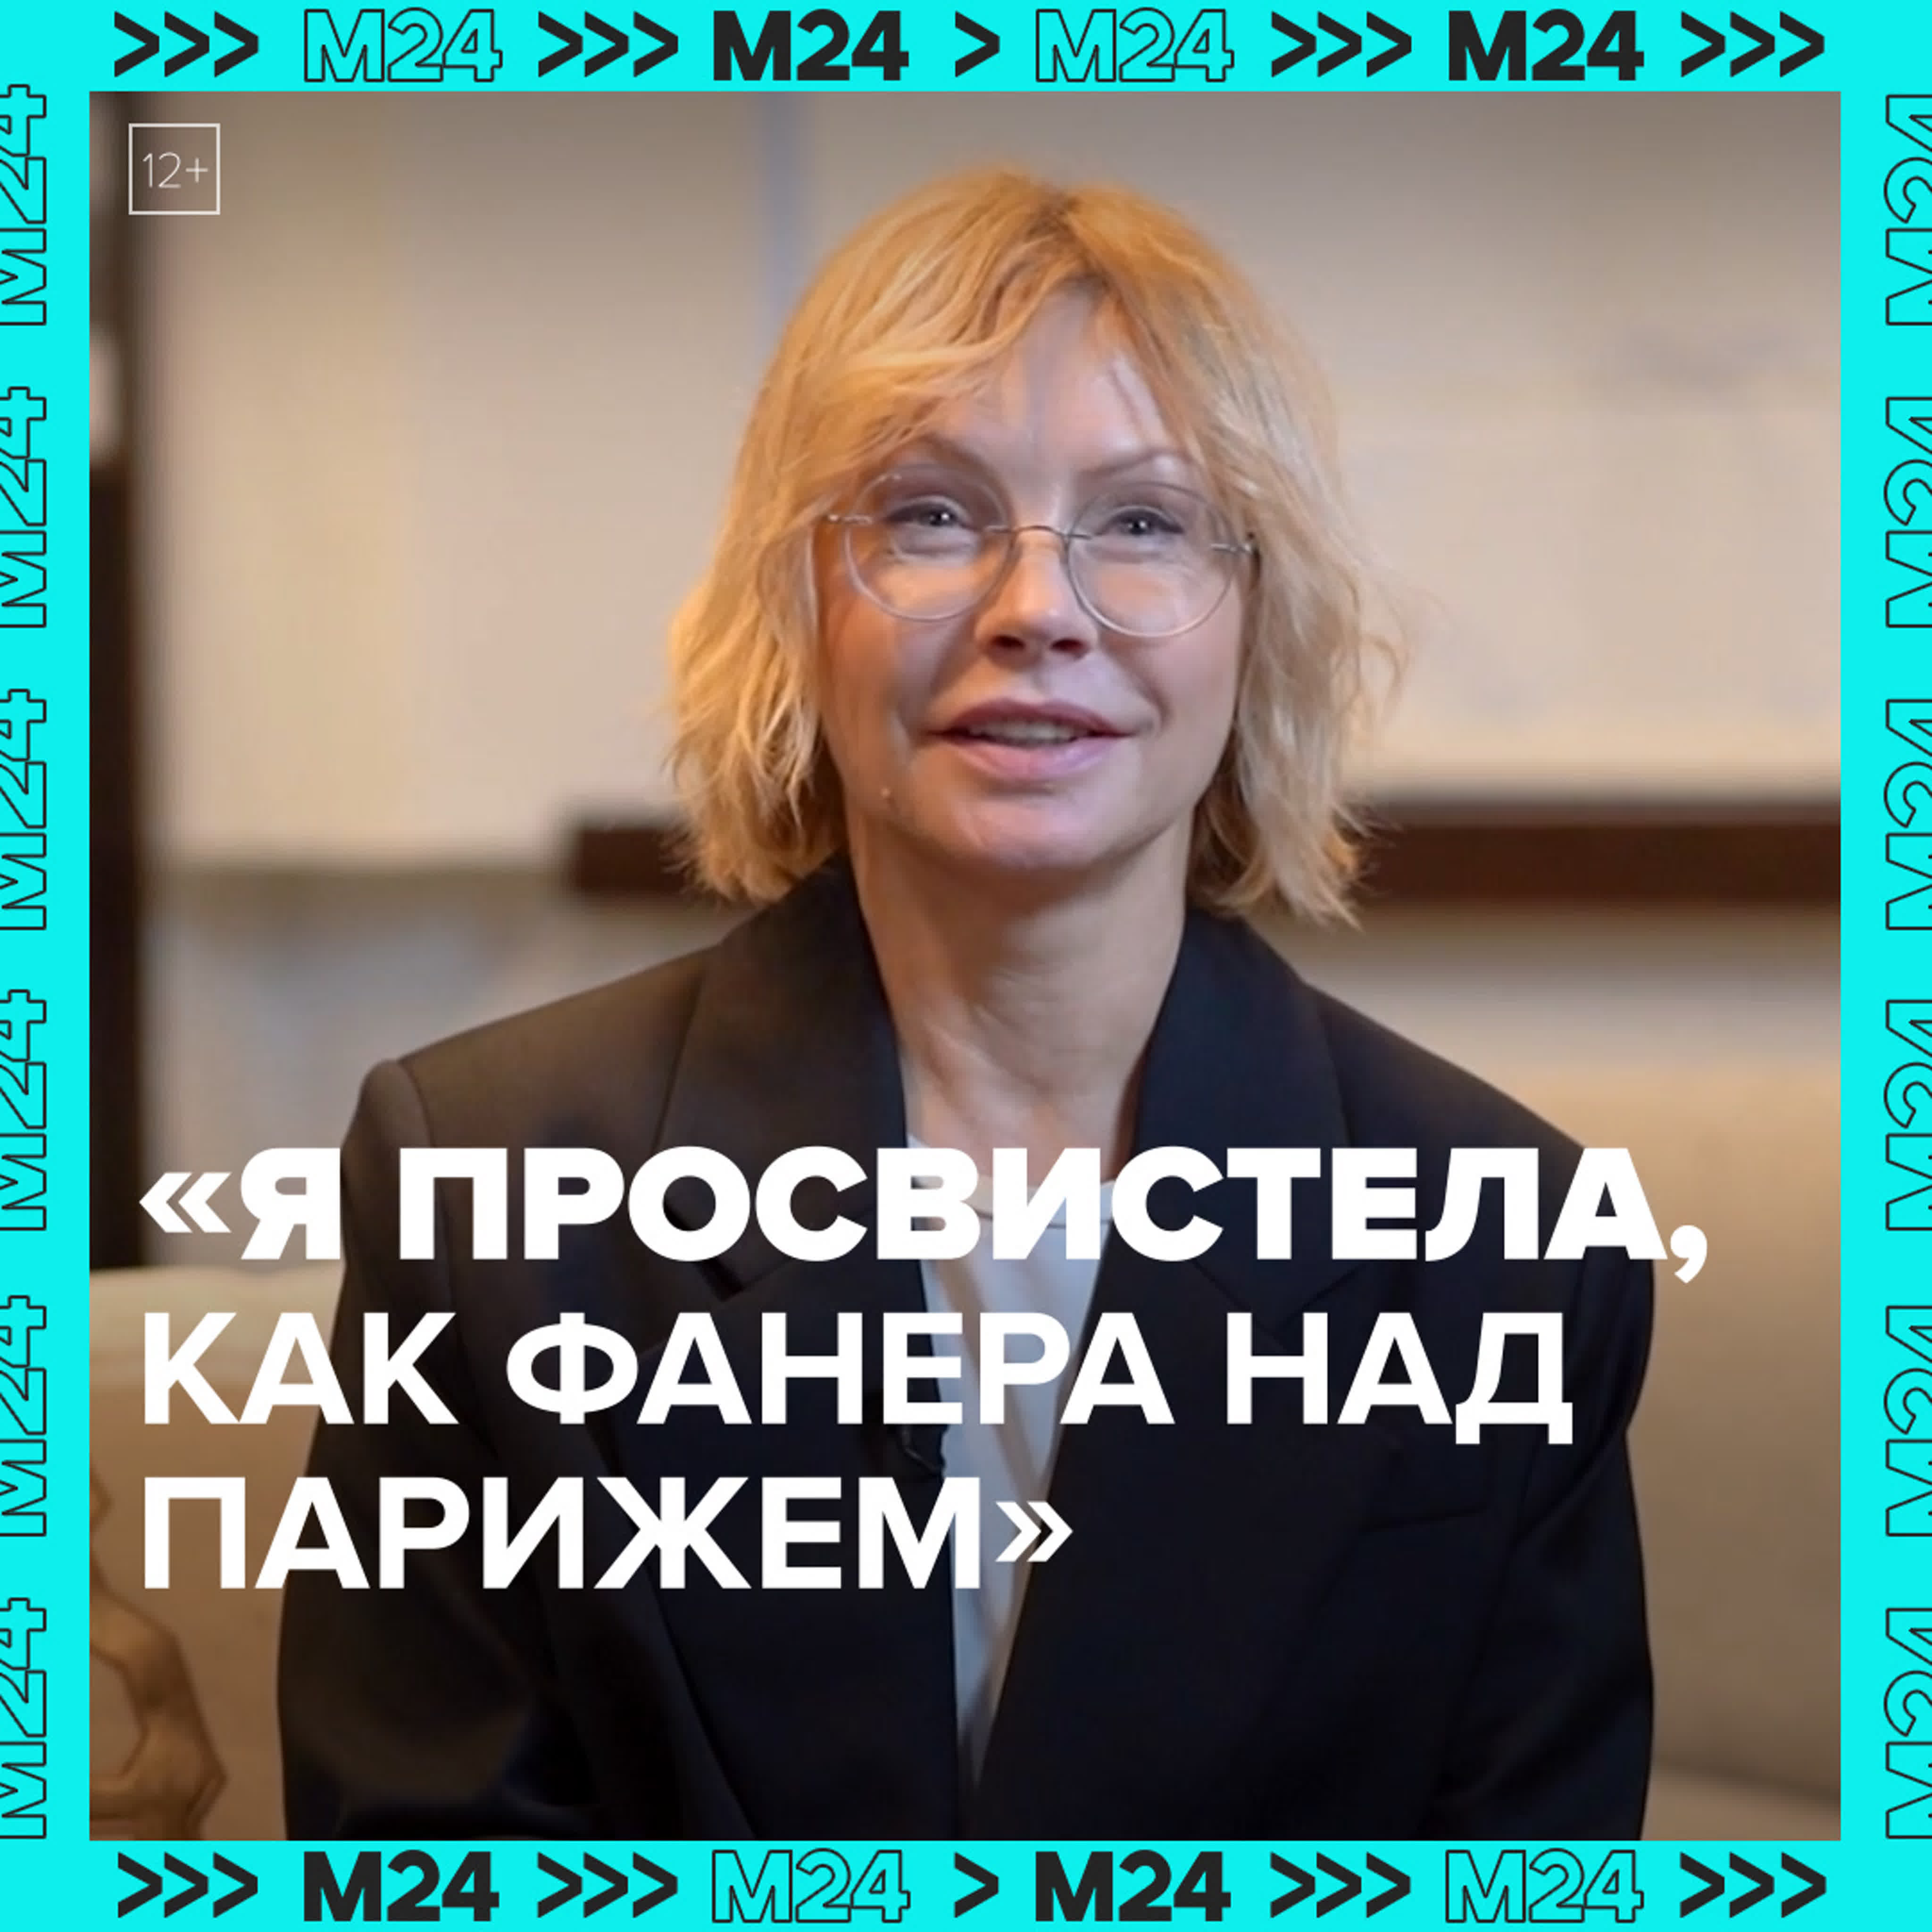 Алёна бабенко в «историс откройте, давид»! москва 24 watch online